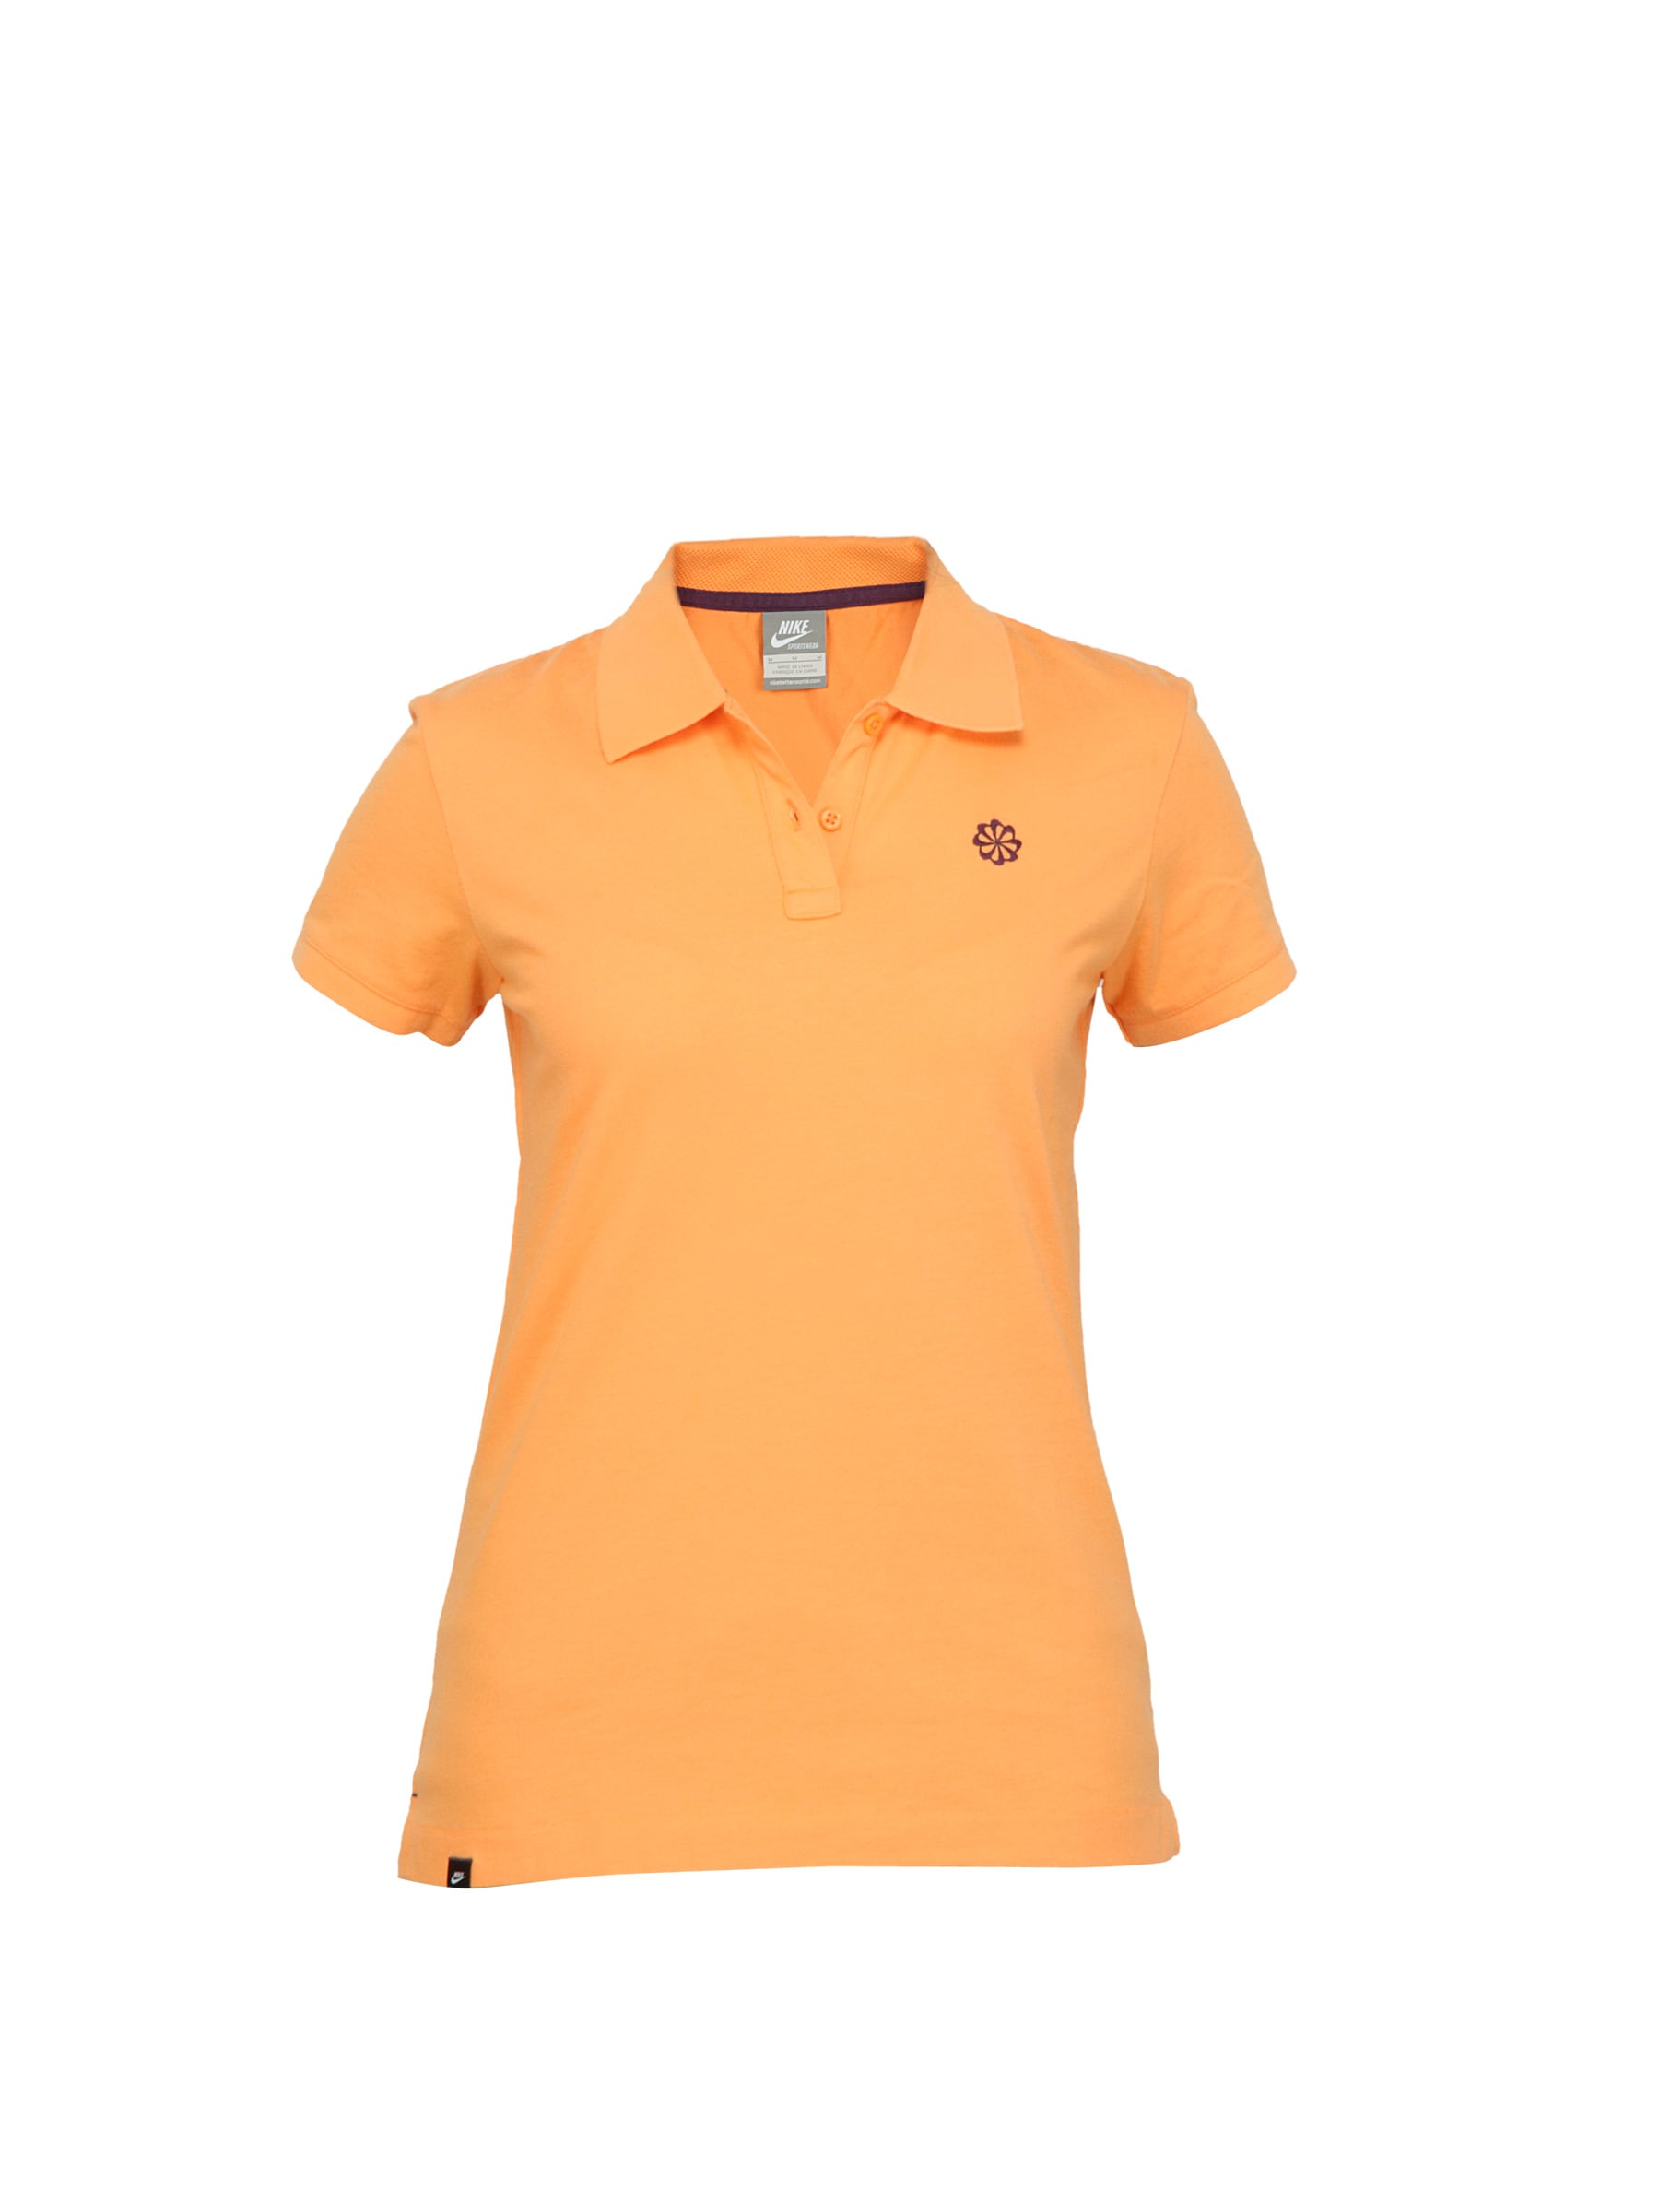 Nike Women's Orange Polo T-shirt